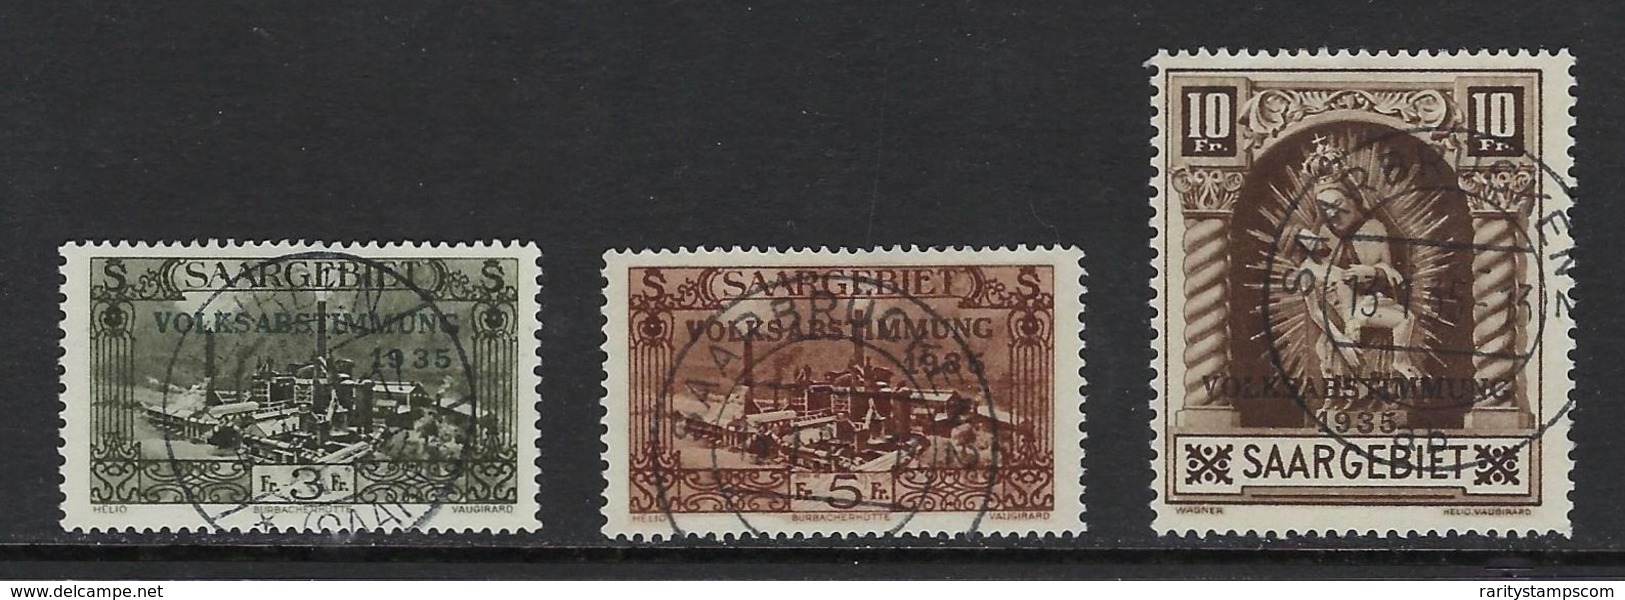 GERMANY SARRE 1935 PLEBISCITE Nº 173/188 + AIR MAIL 5/8 - Nuevos